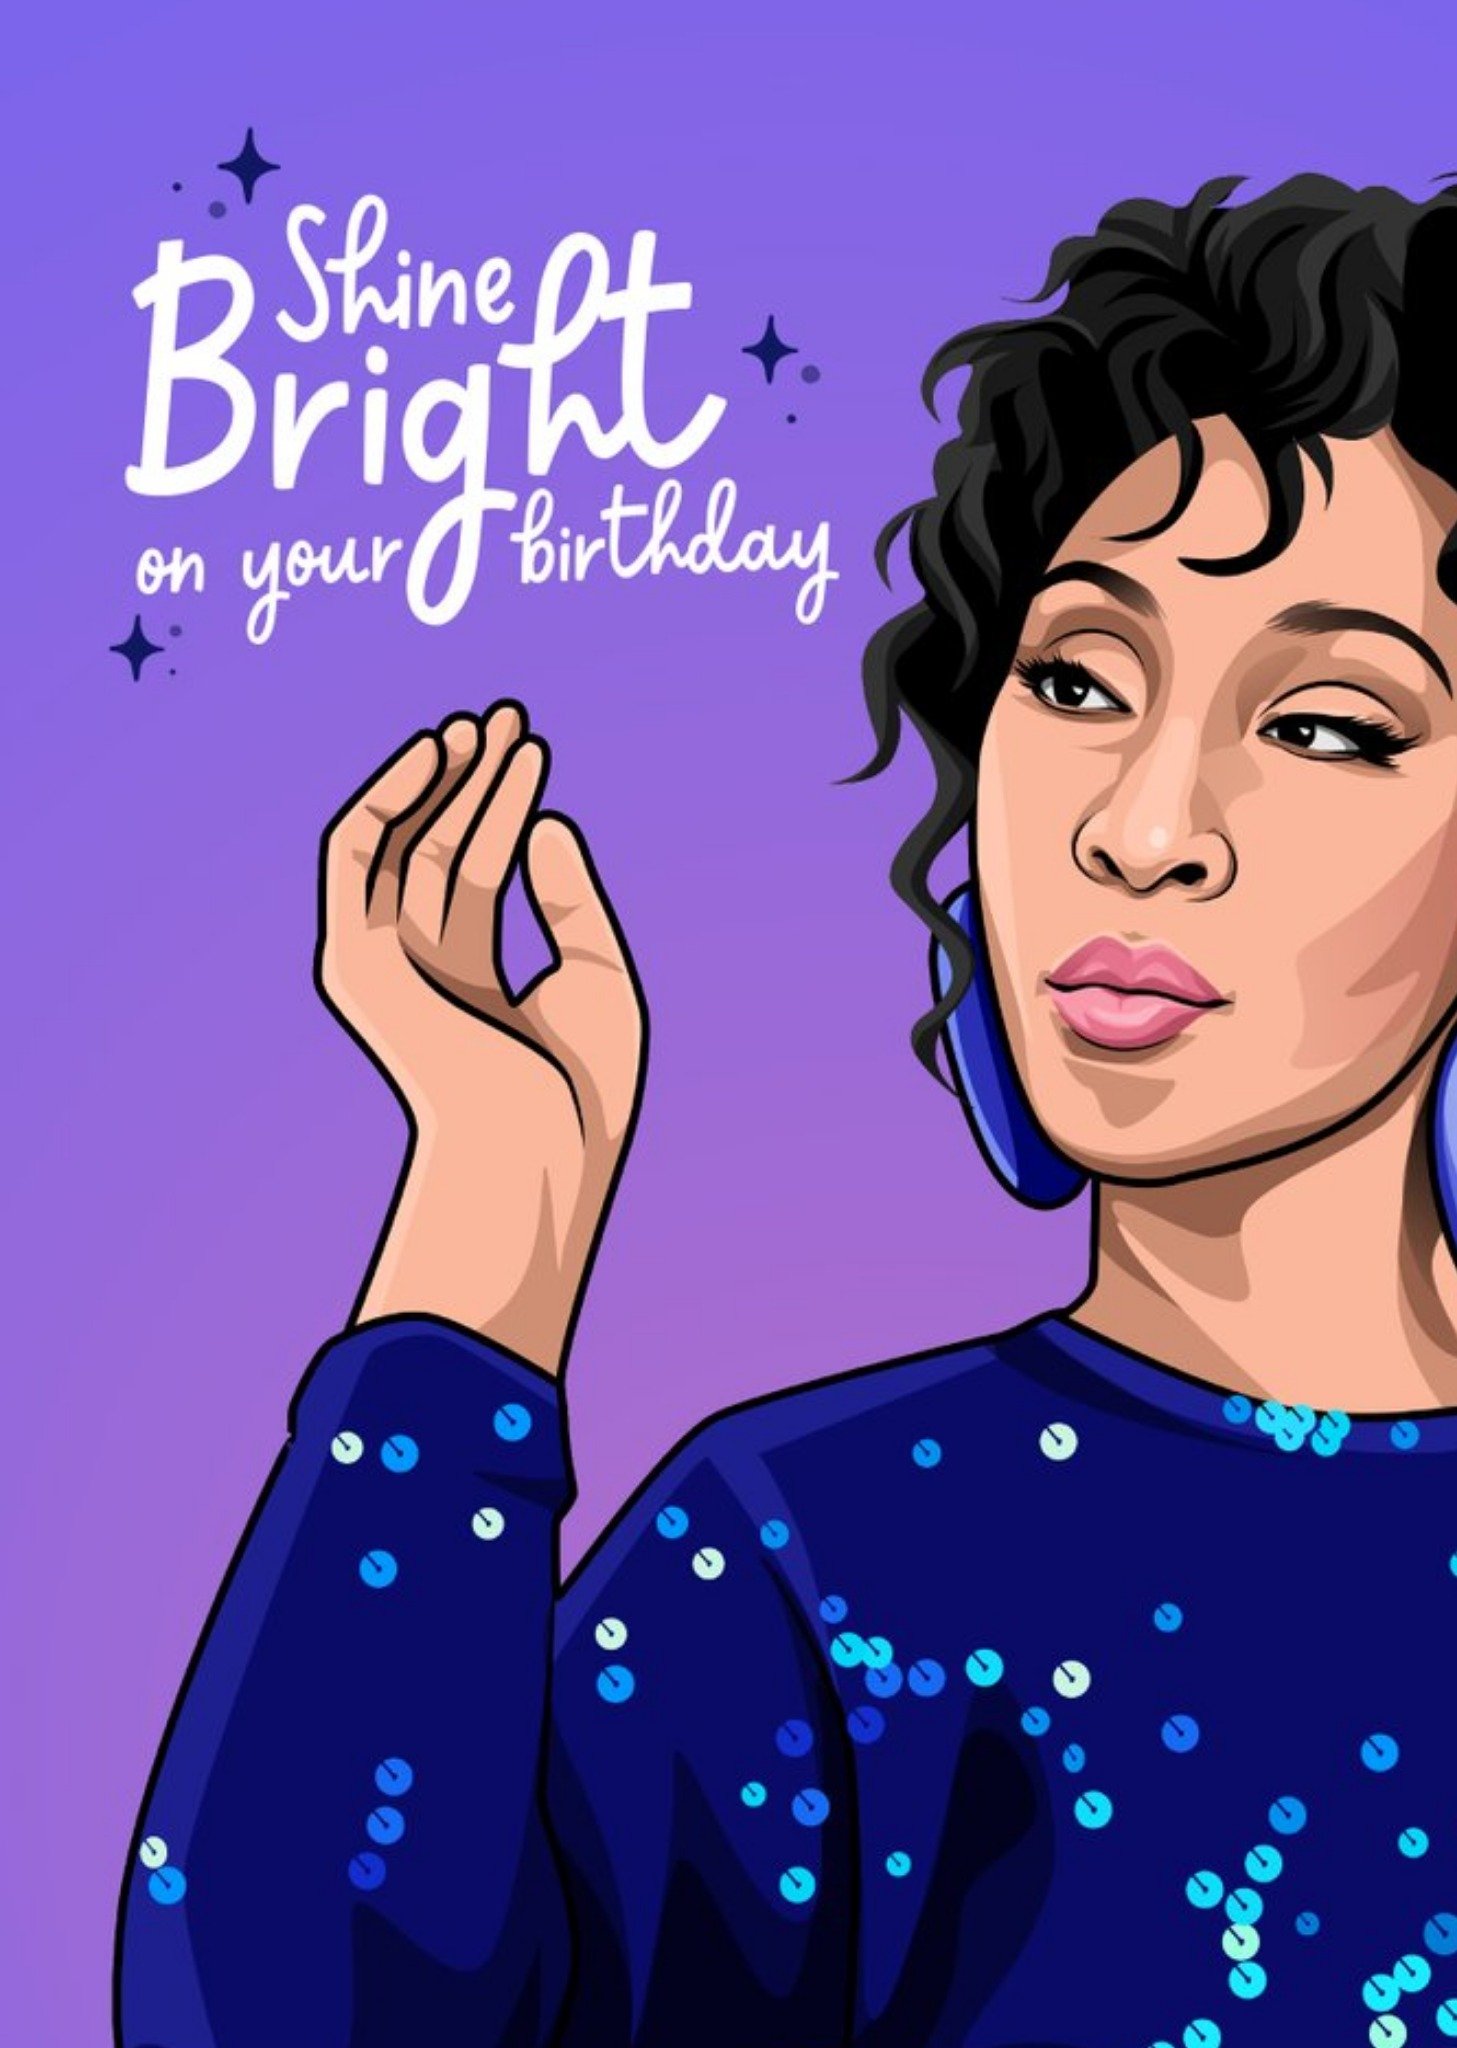 All Things Banter Illustration Of Singer Shine Bright Birthday Card Ecard